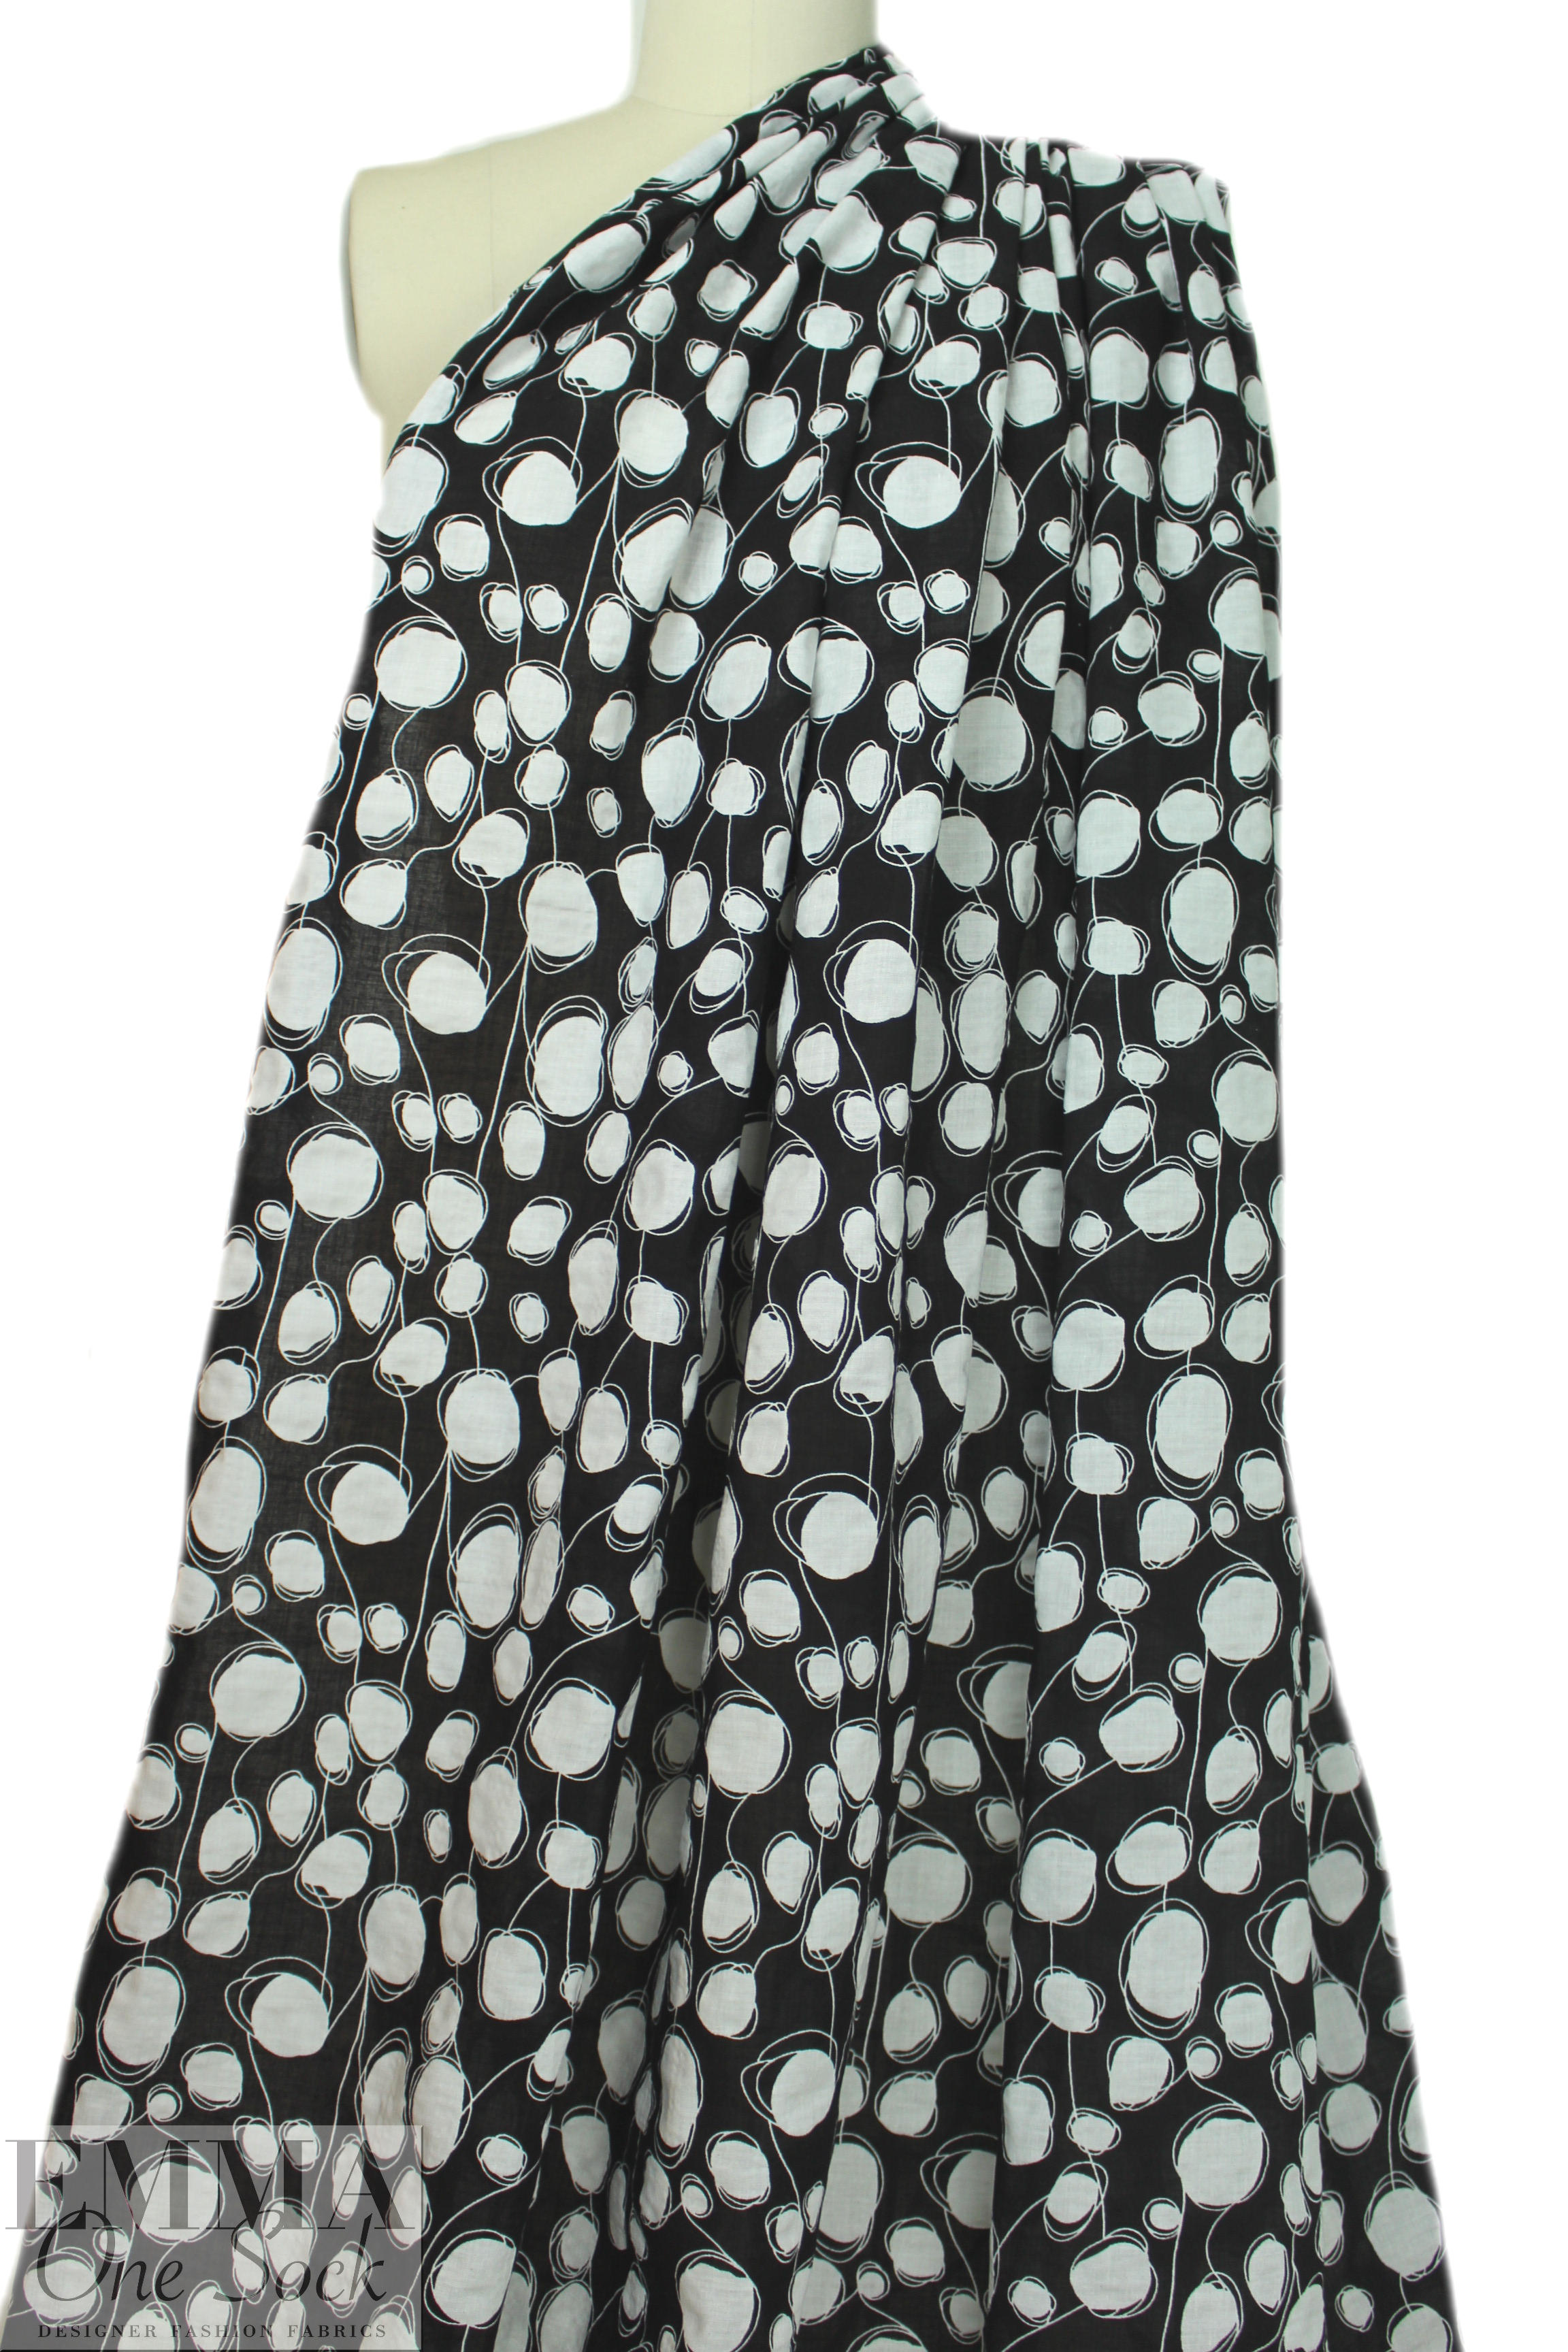 'Boba' cotton/linen lightweight woven - white on black from EmmaOneSock.com